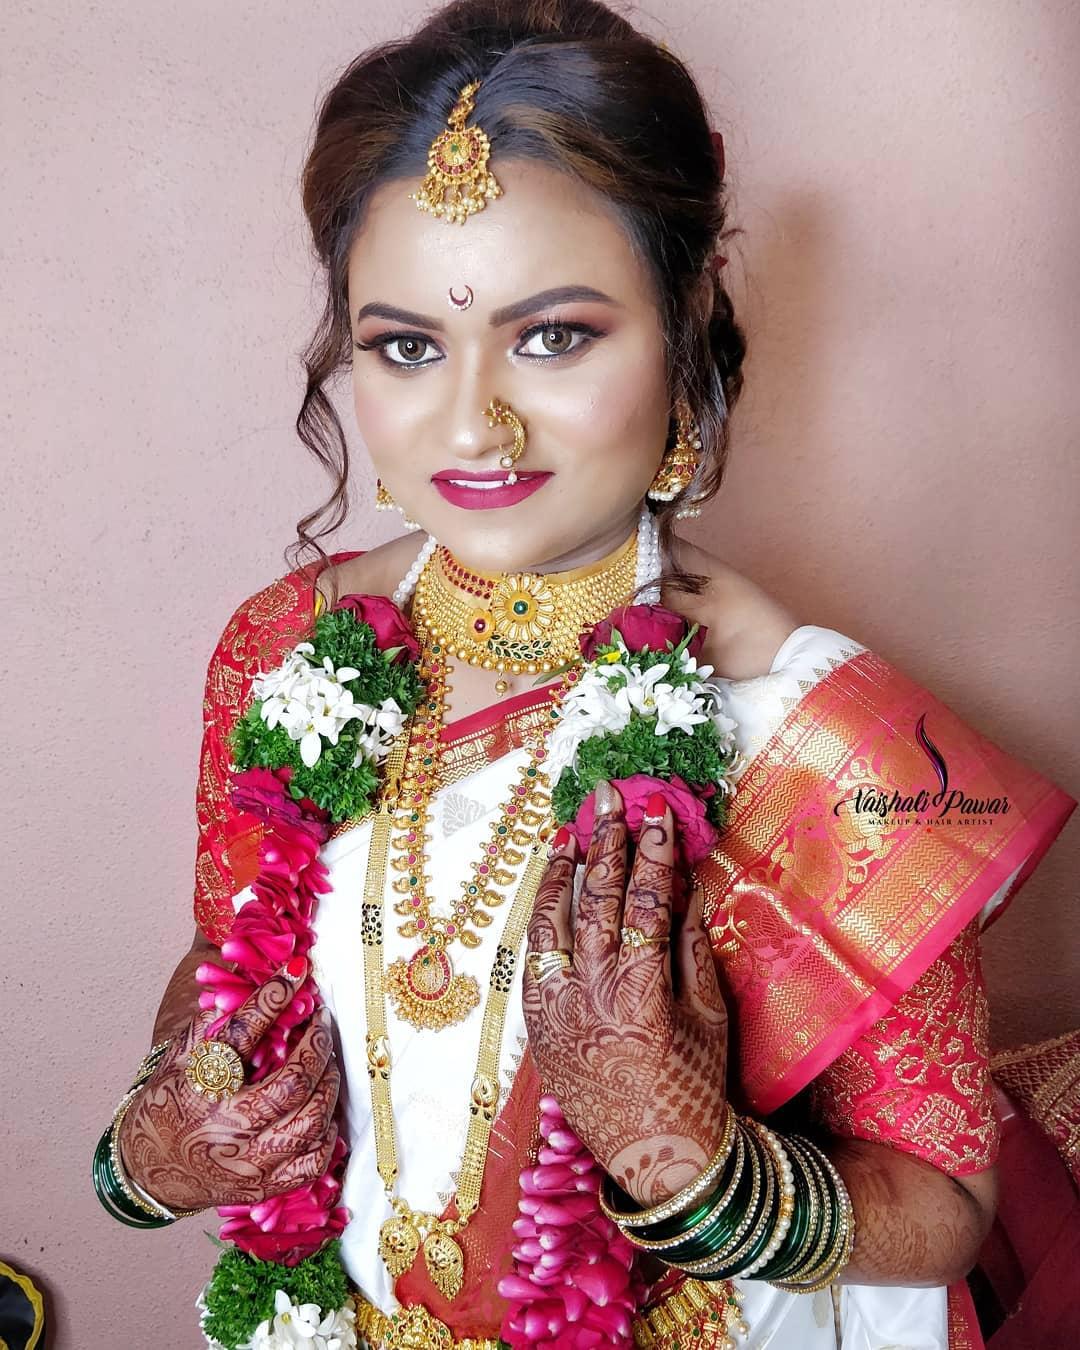 Beautiful Nauvari Sarees We Spotted On These Real Maharashtrian Brides! |  Nauvari saree, Indian bride outfits, Indian bride hairstyle